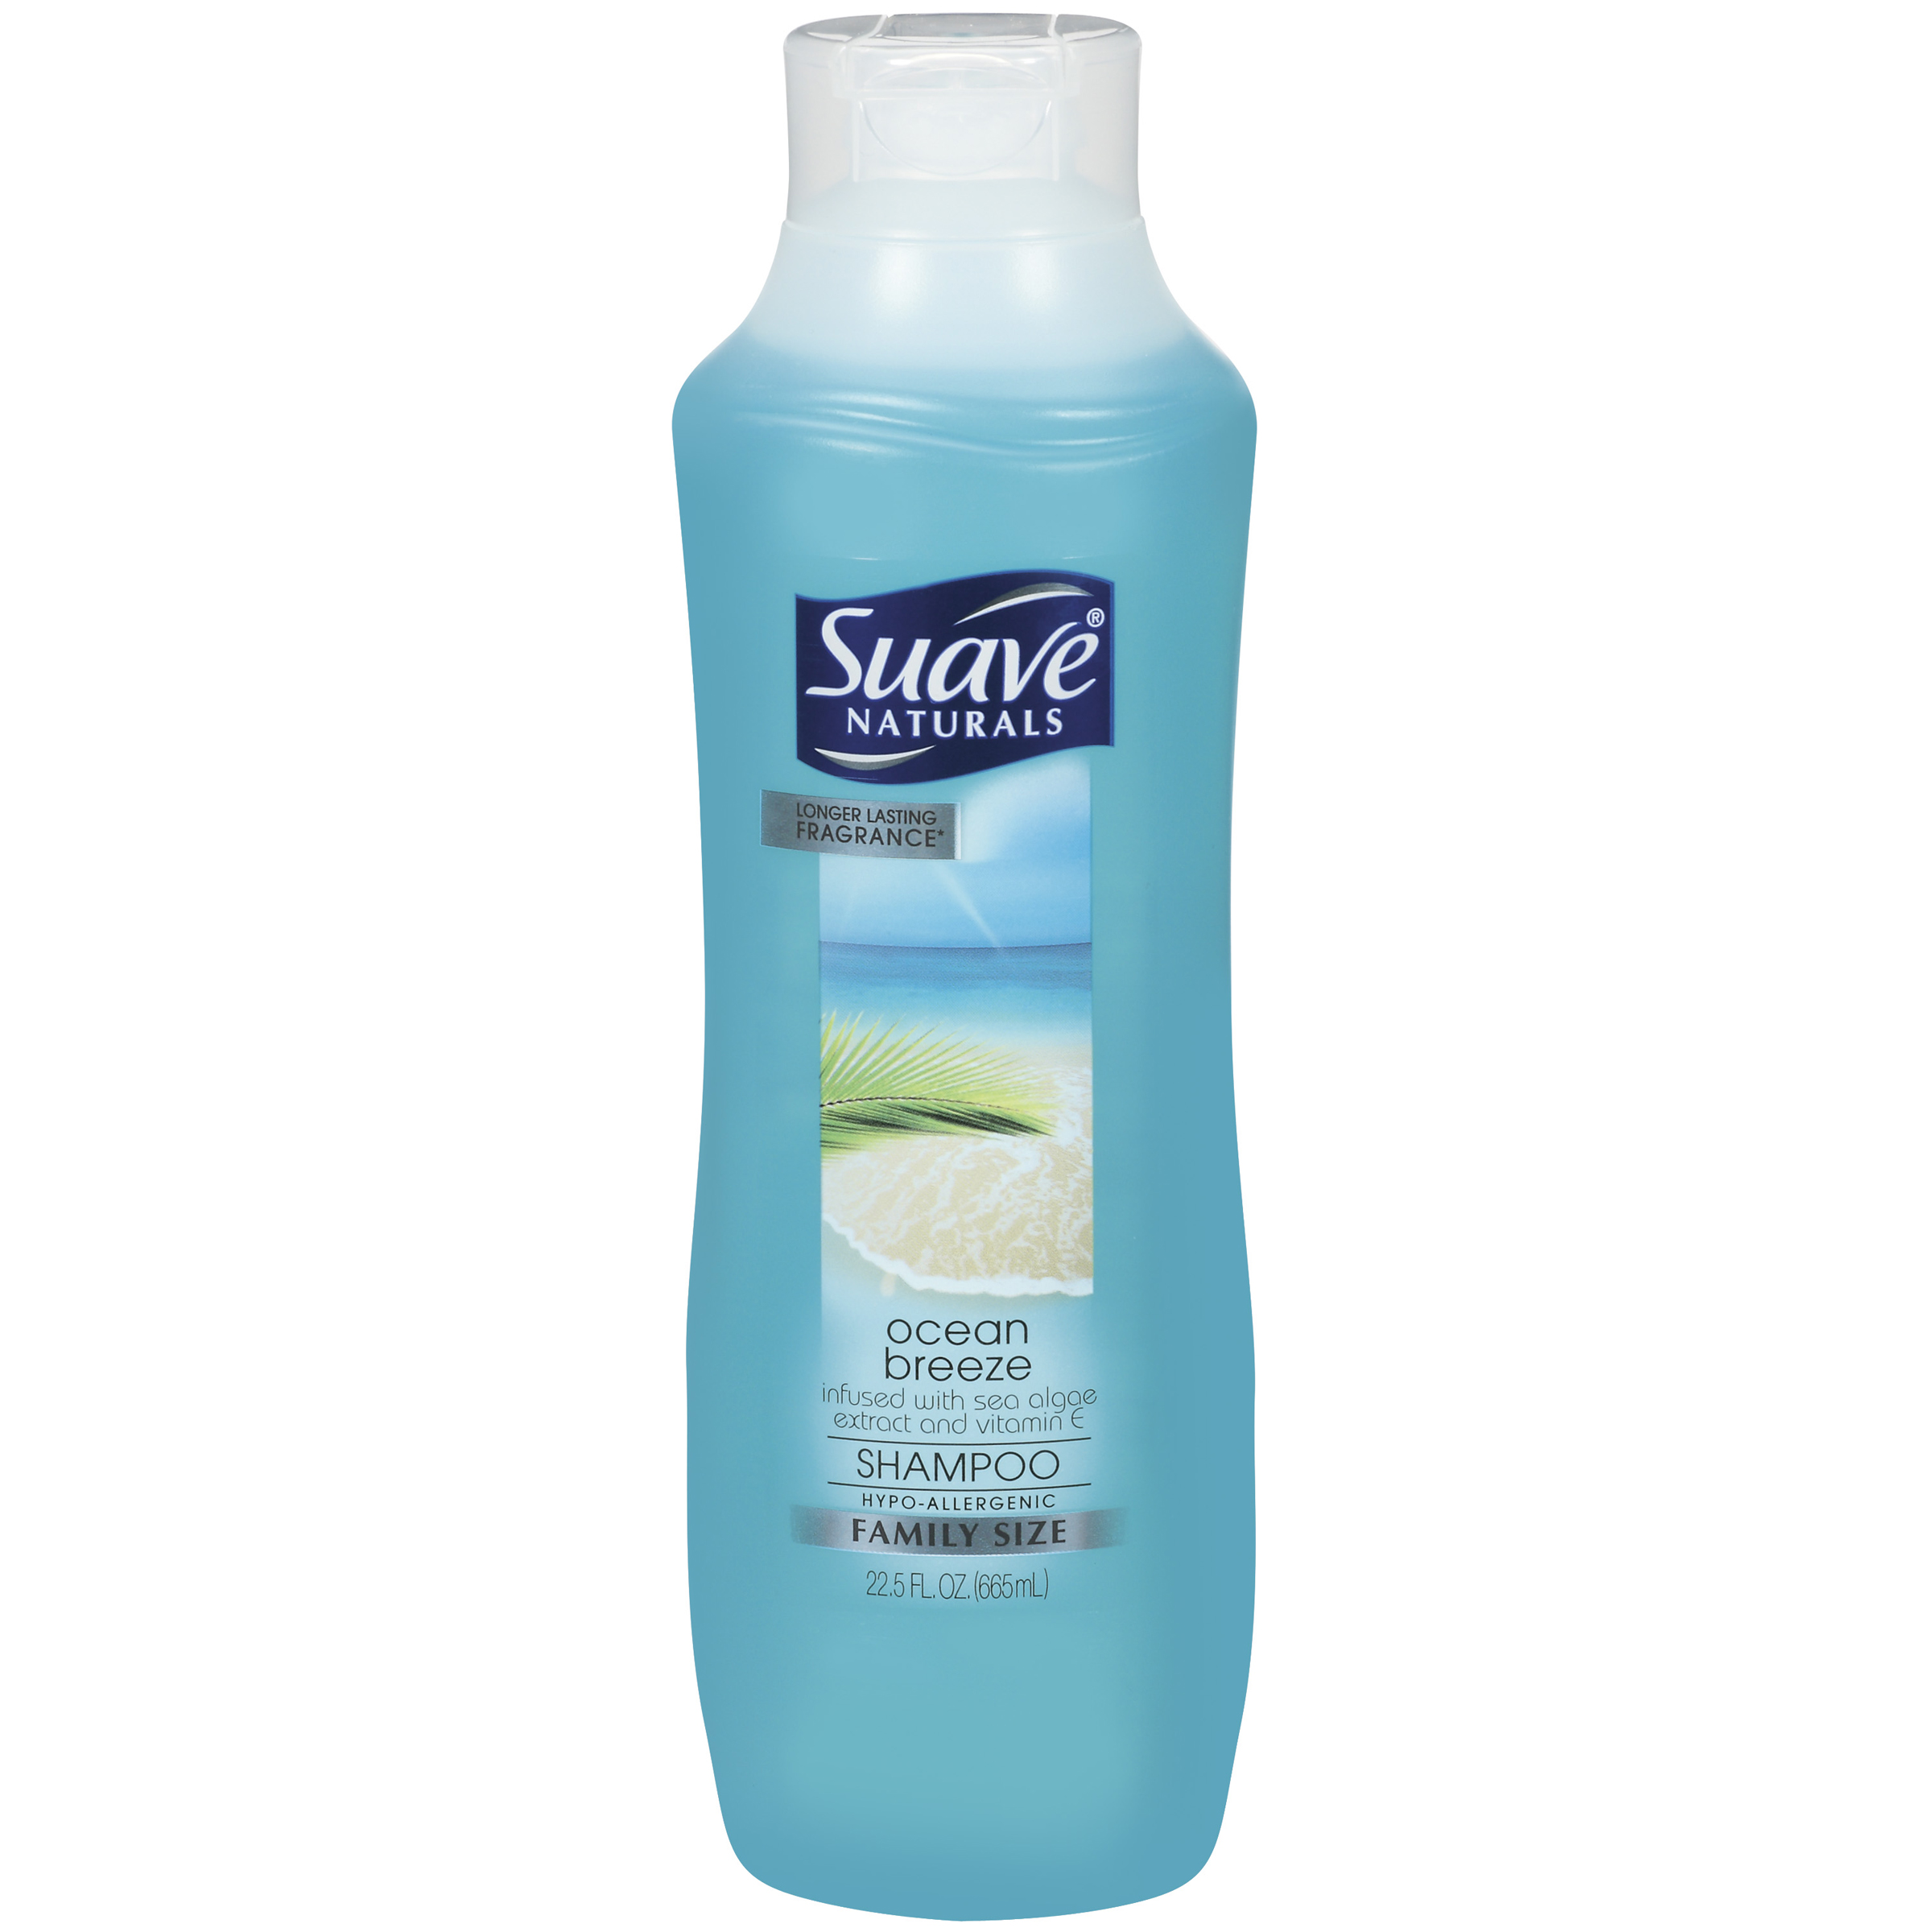 Suave Naturals Shampoo, Ocean Breeze, Family Size, 22.5 oz